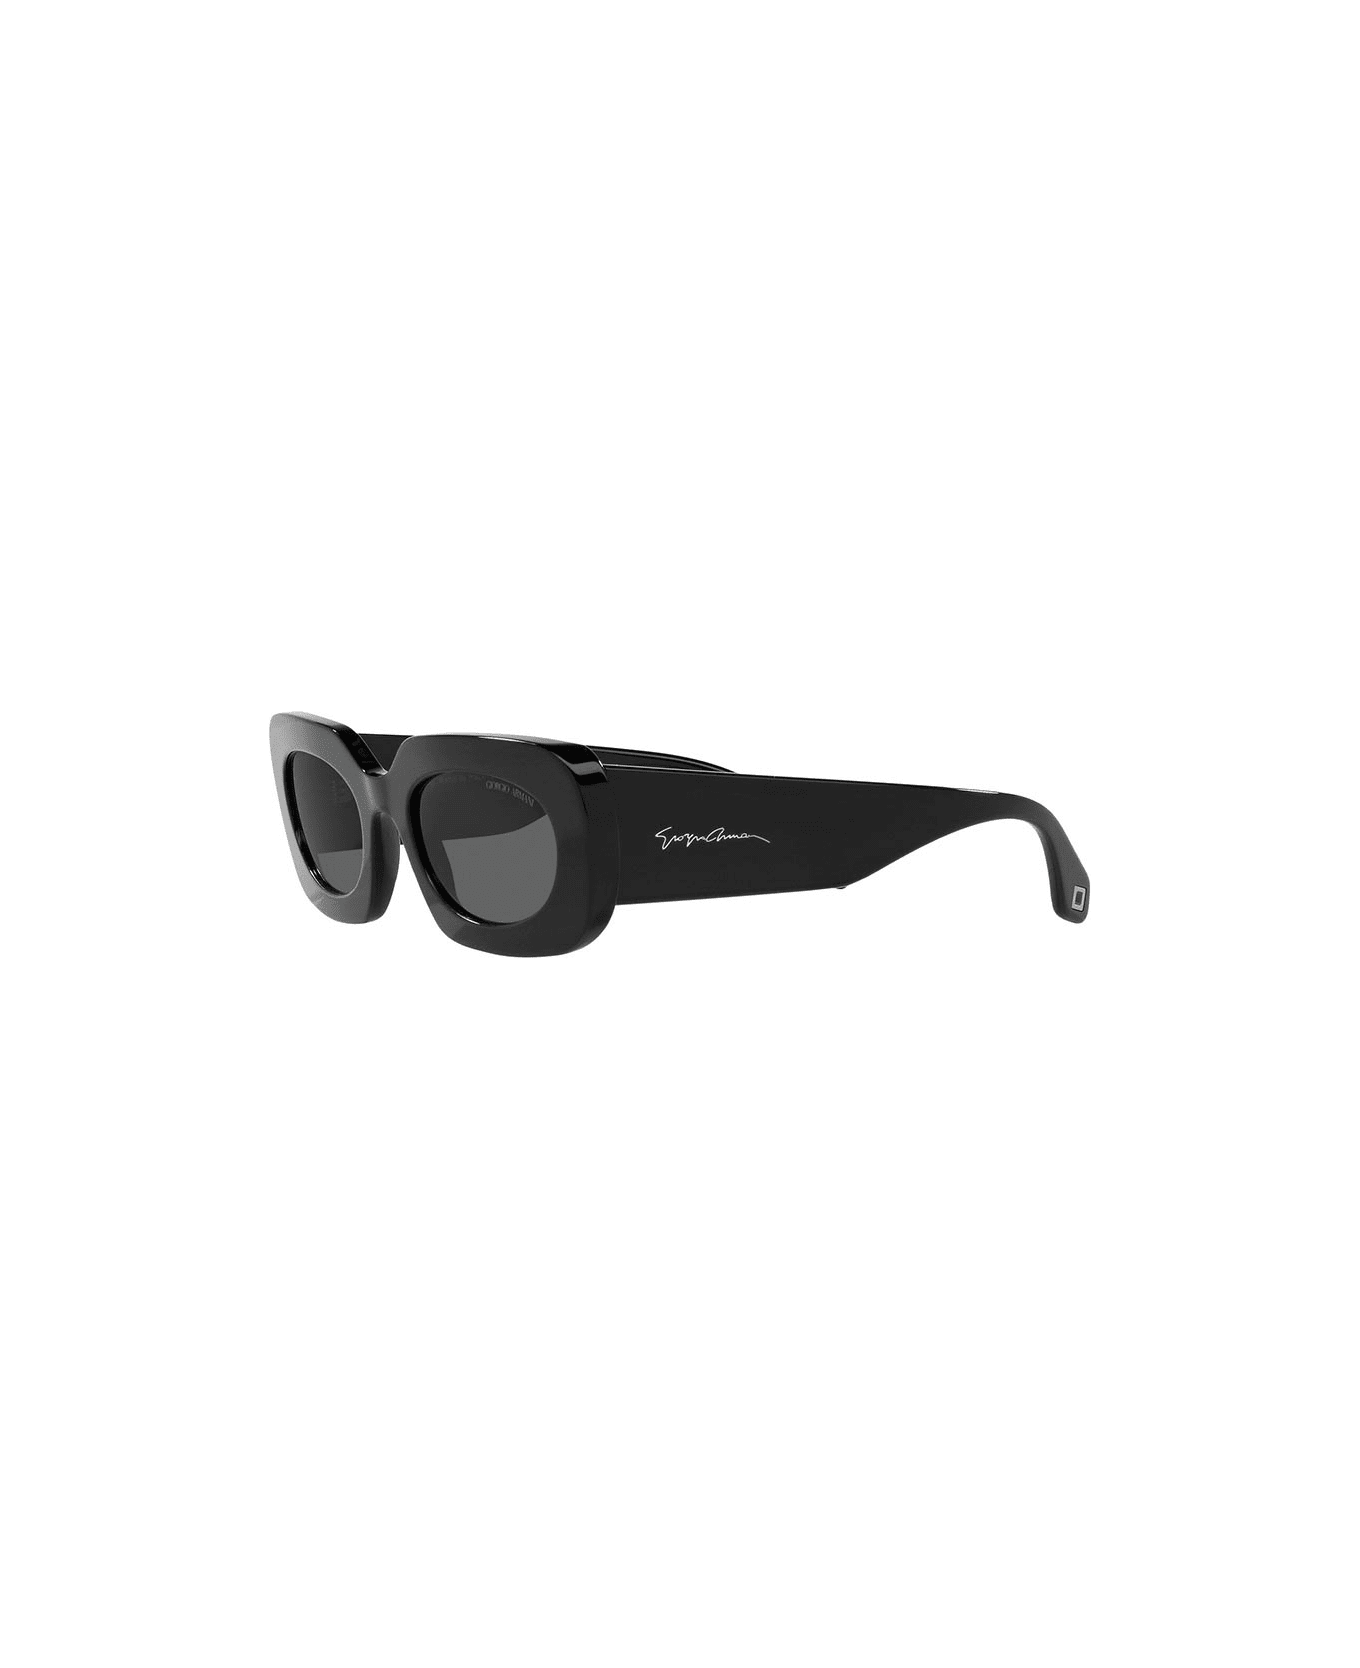 Giorgio Armani Sunglasses - Nero/Nero アイウェア